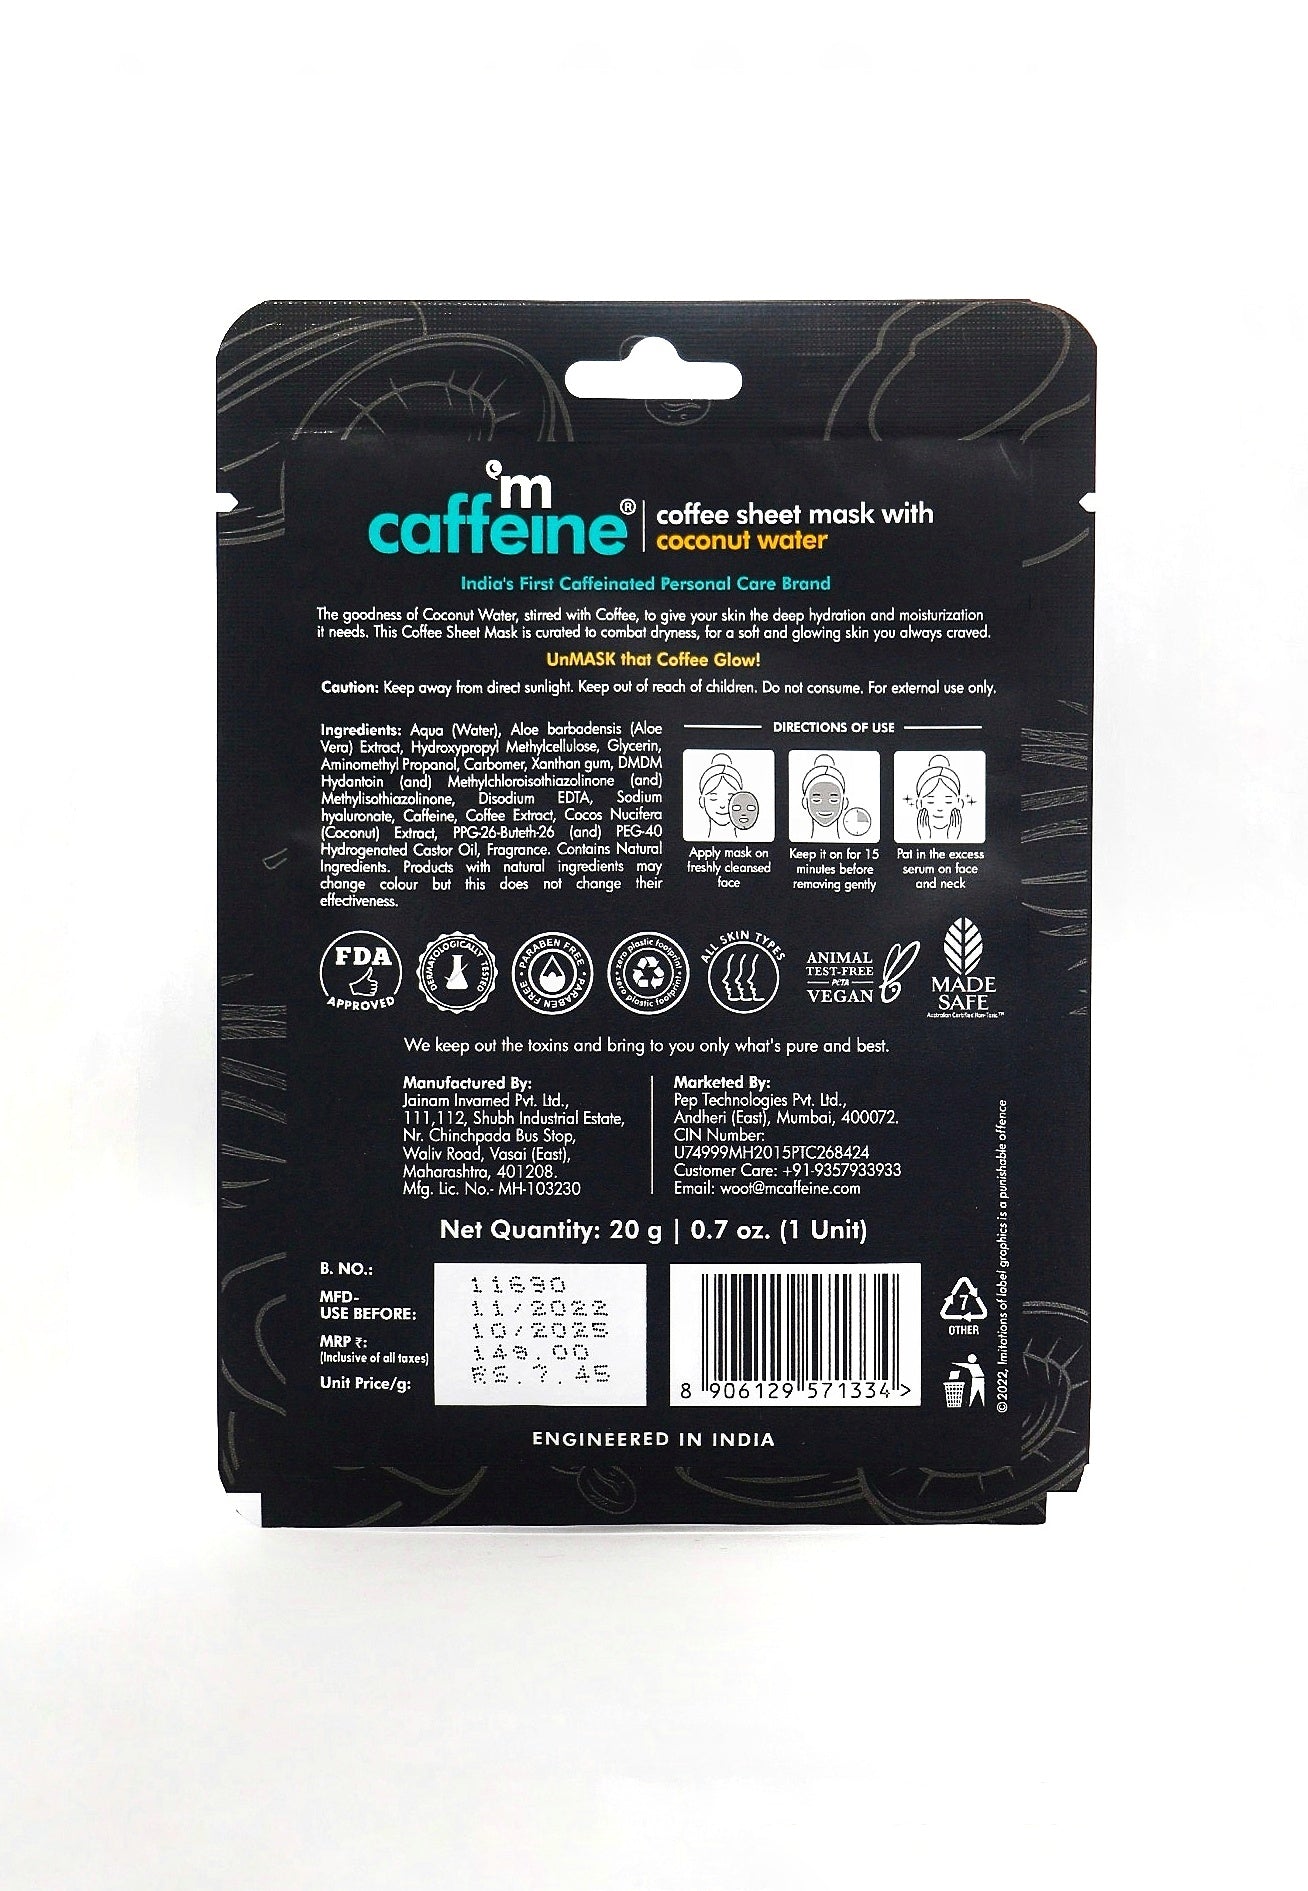 mCaffeine Coconut Water Coffee Sheet Mask for Double Moisturization - 20g